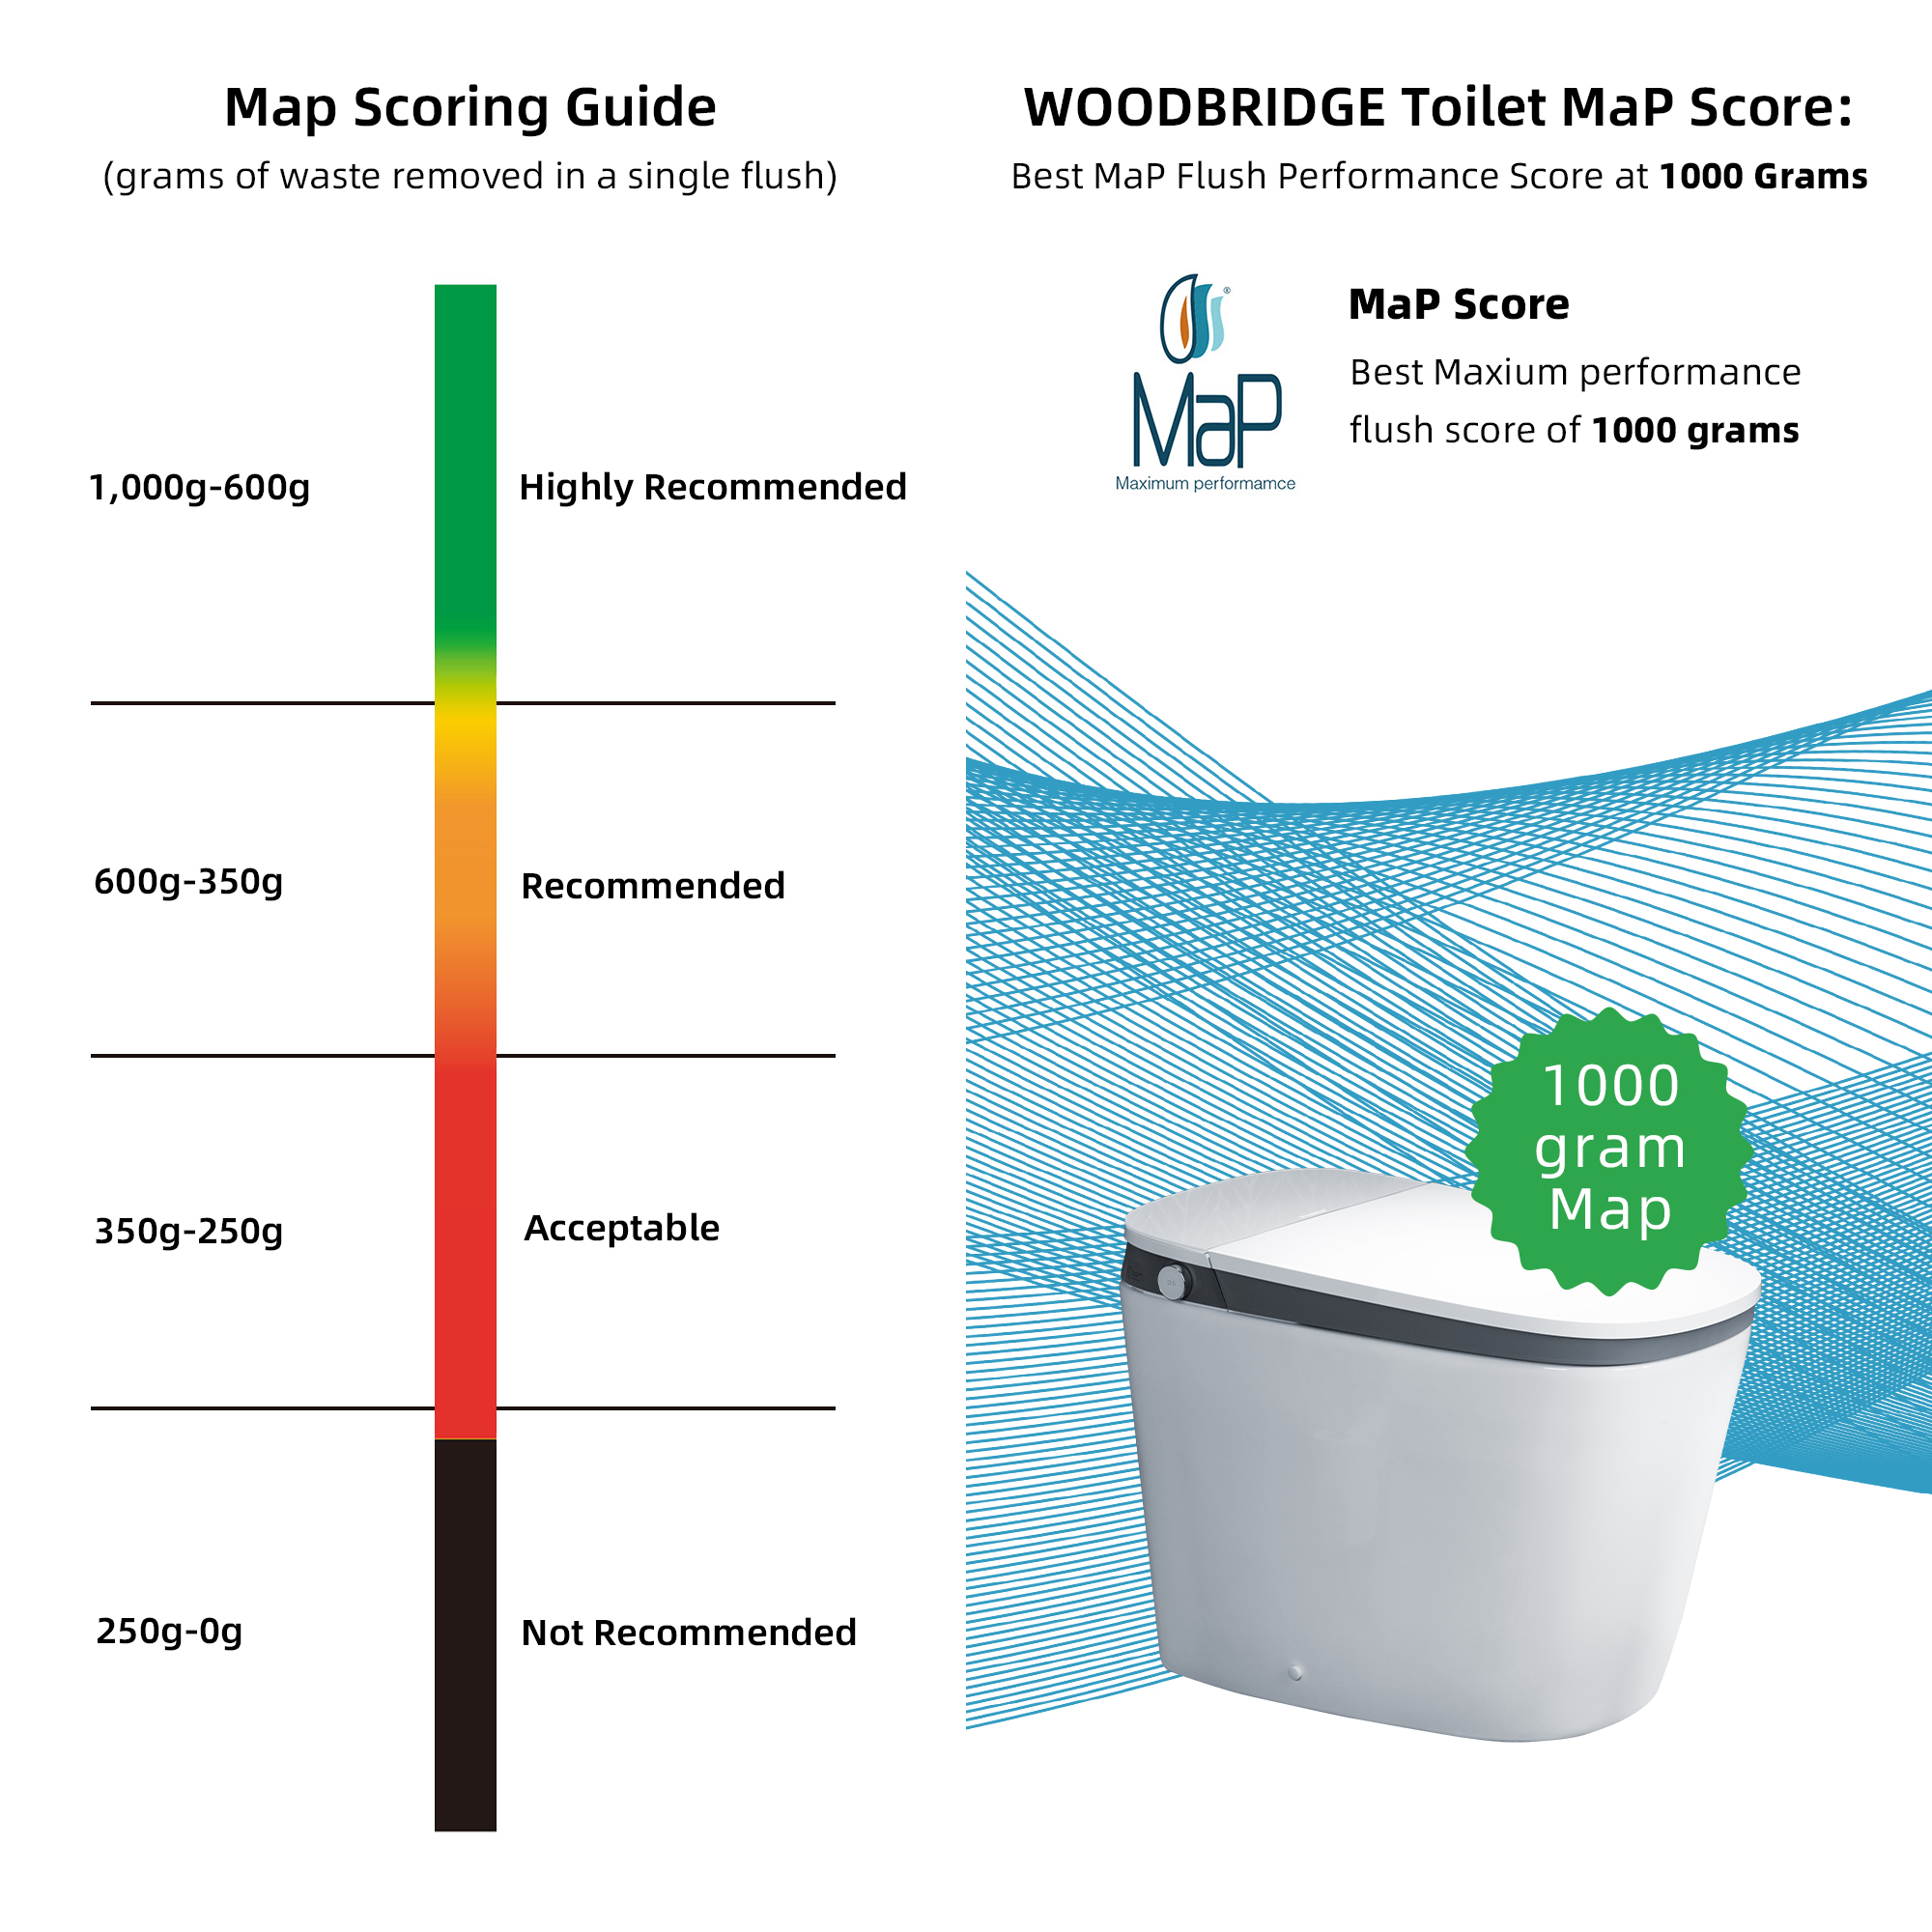  WOODBRIDGE B0931S Smart Bidet Toilet with 1.28 GPF Dual Flush Auto Open & Close, Foot Sensor Flush, Voice Control,1000 Gram Map Flushing Score, LED Display, Chair Height Design and Cleaning Foam Dispenser_13926